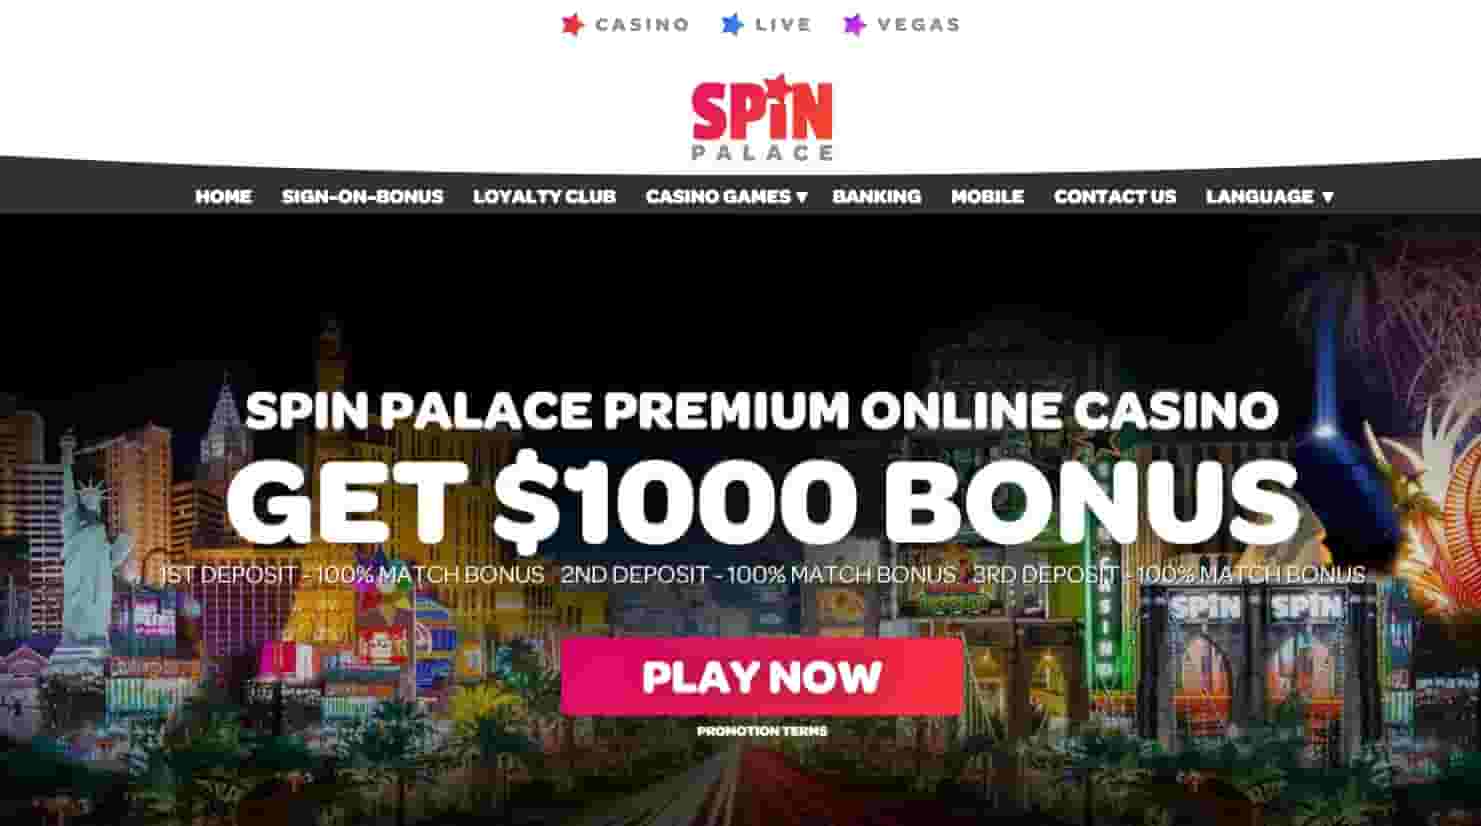 Spin casino live